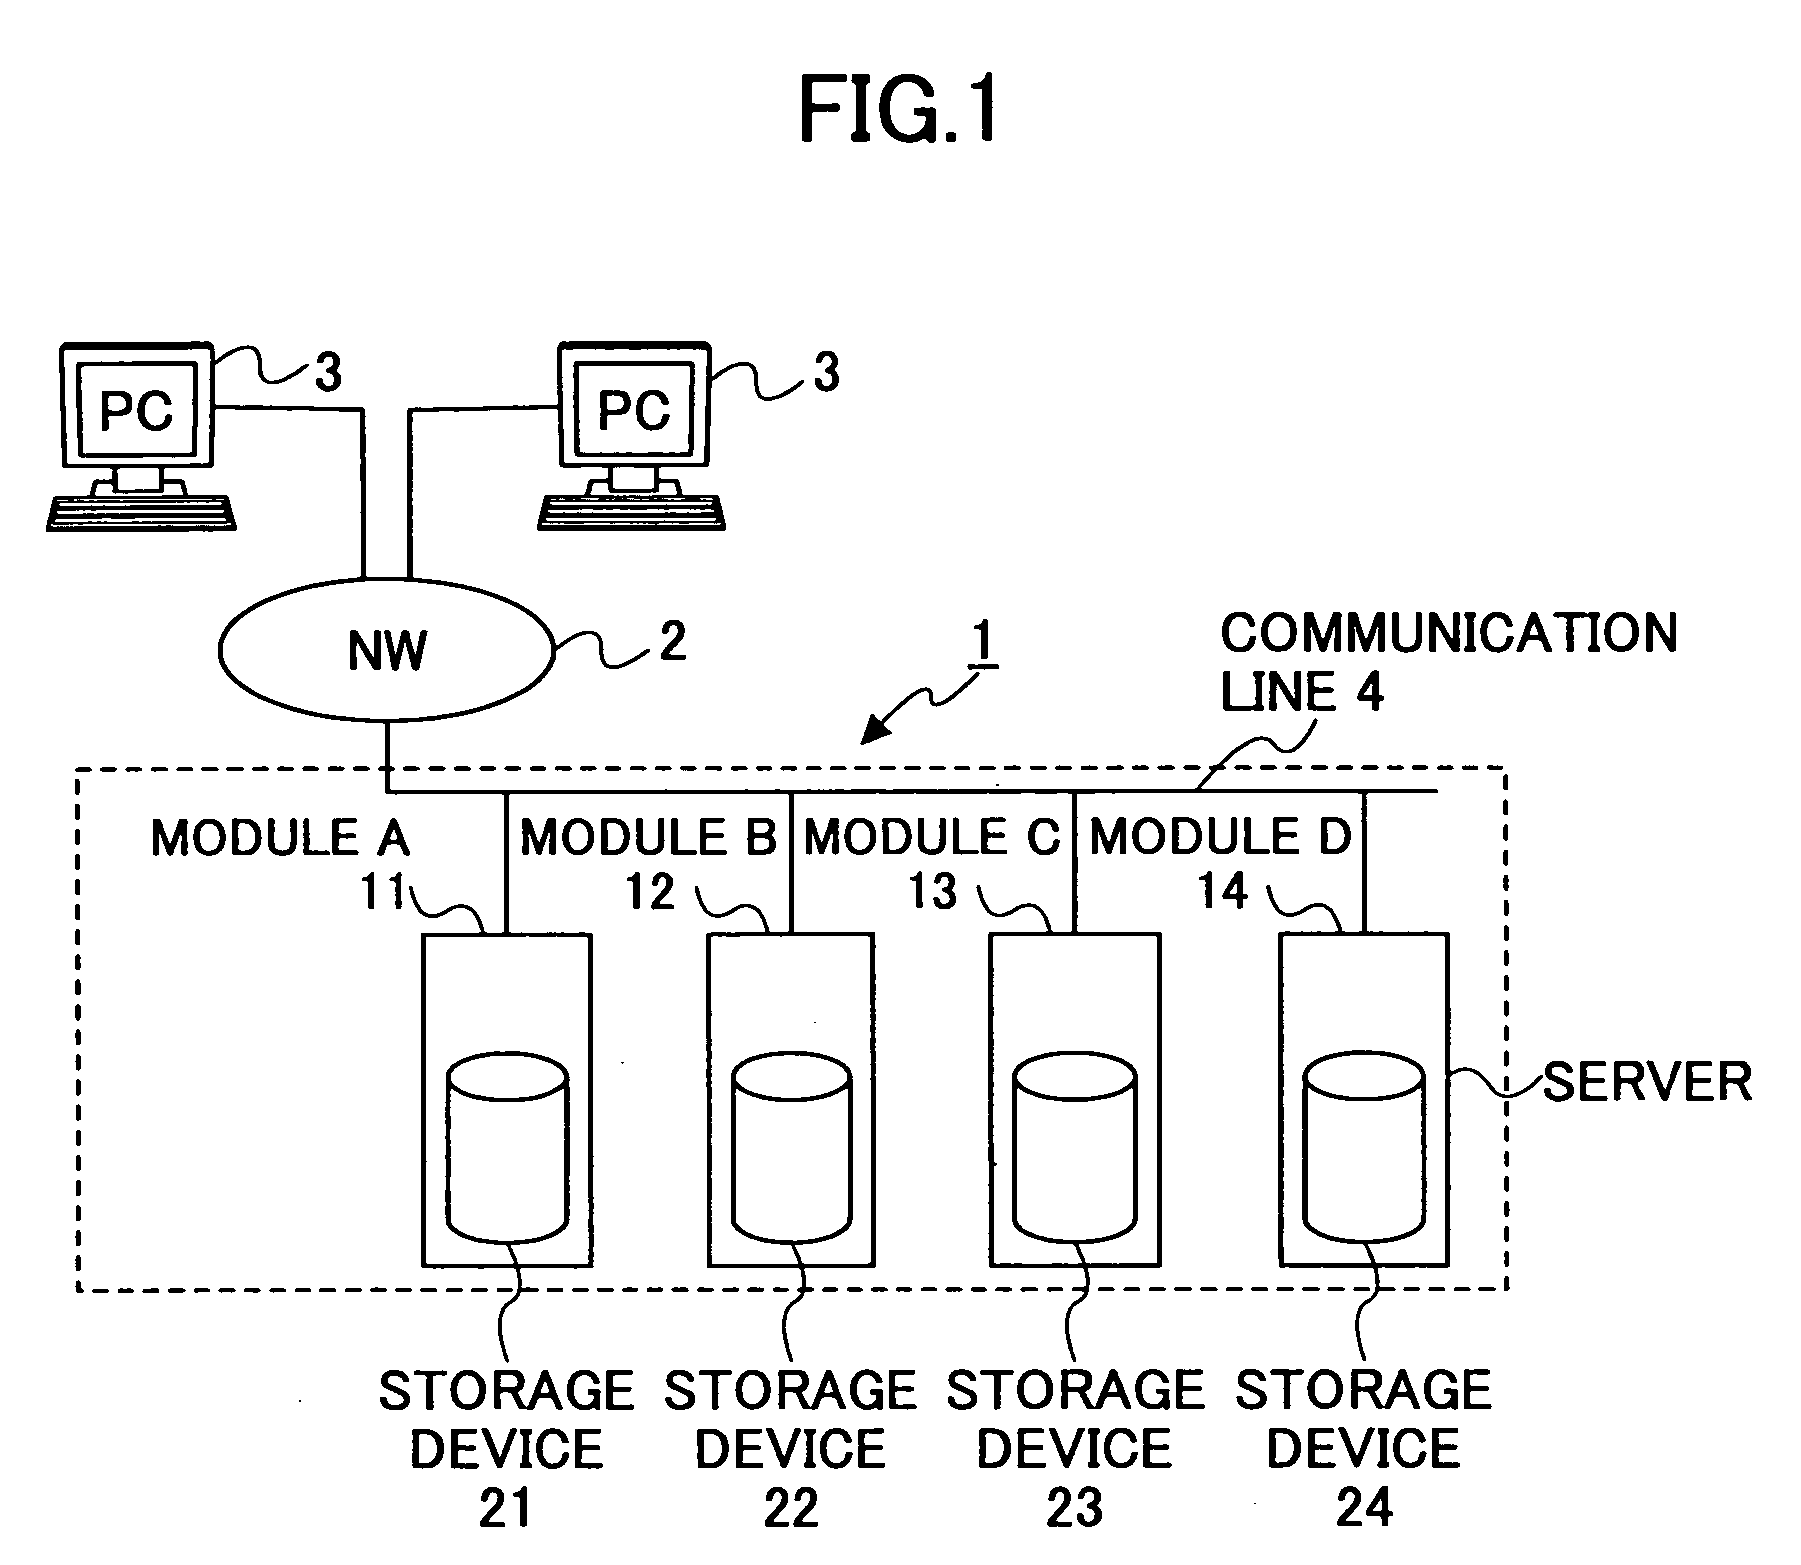 Storage system